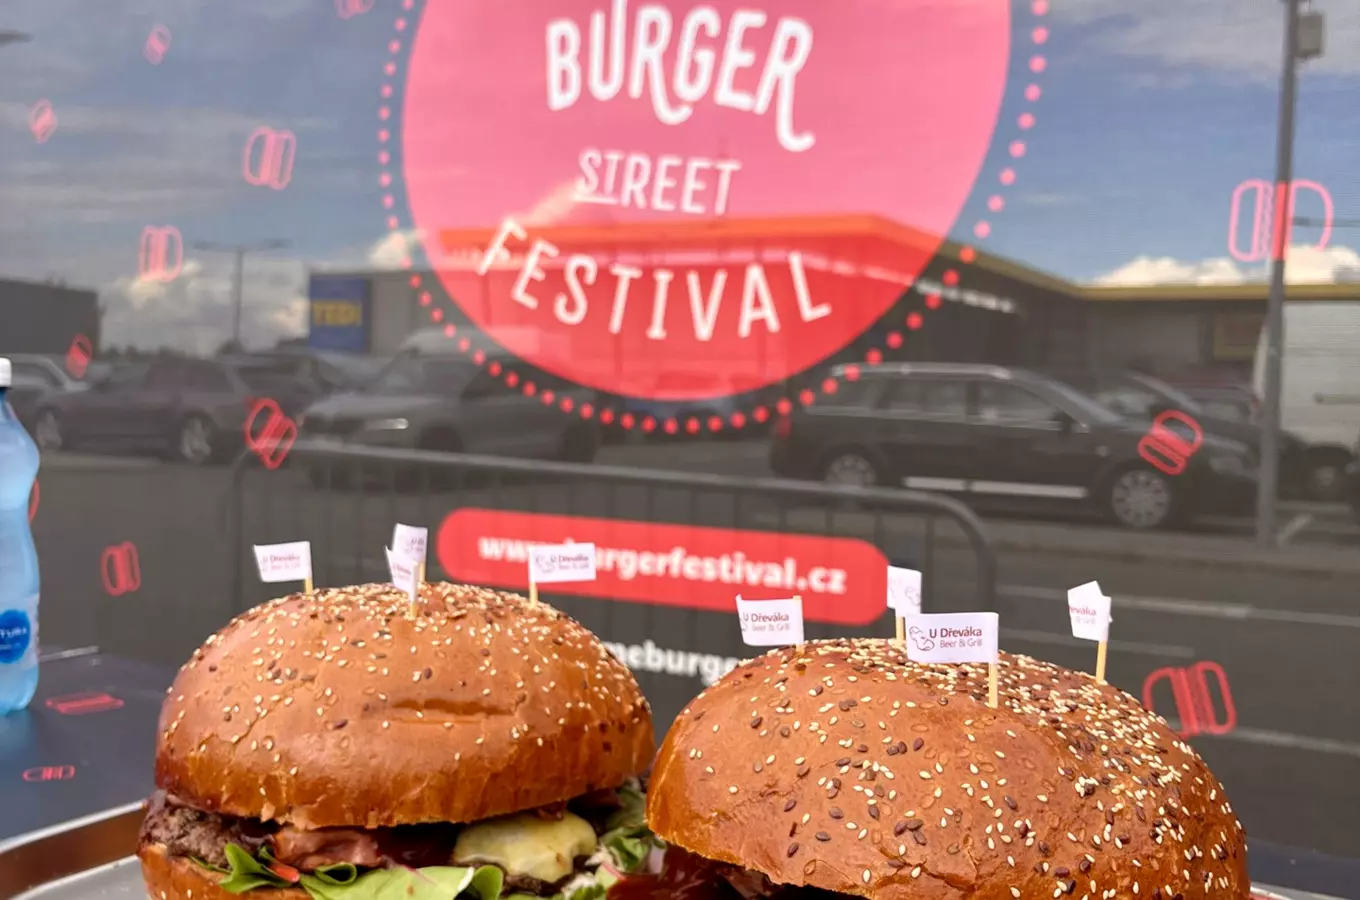 Burger Street Festival Opava | Megaburger